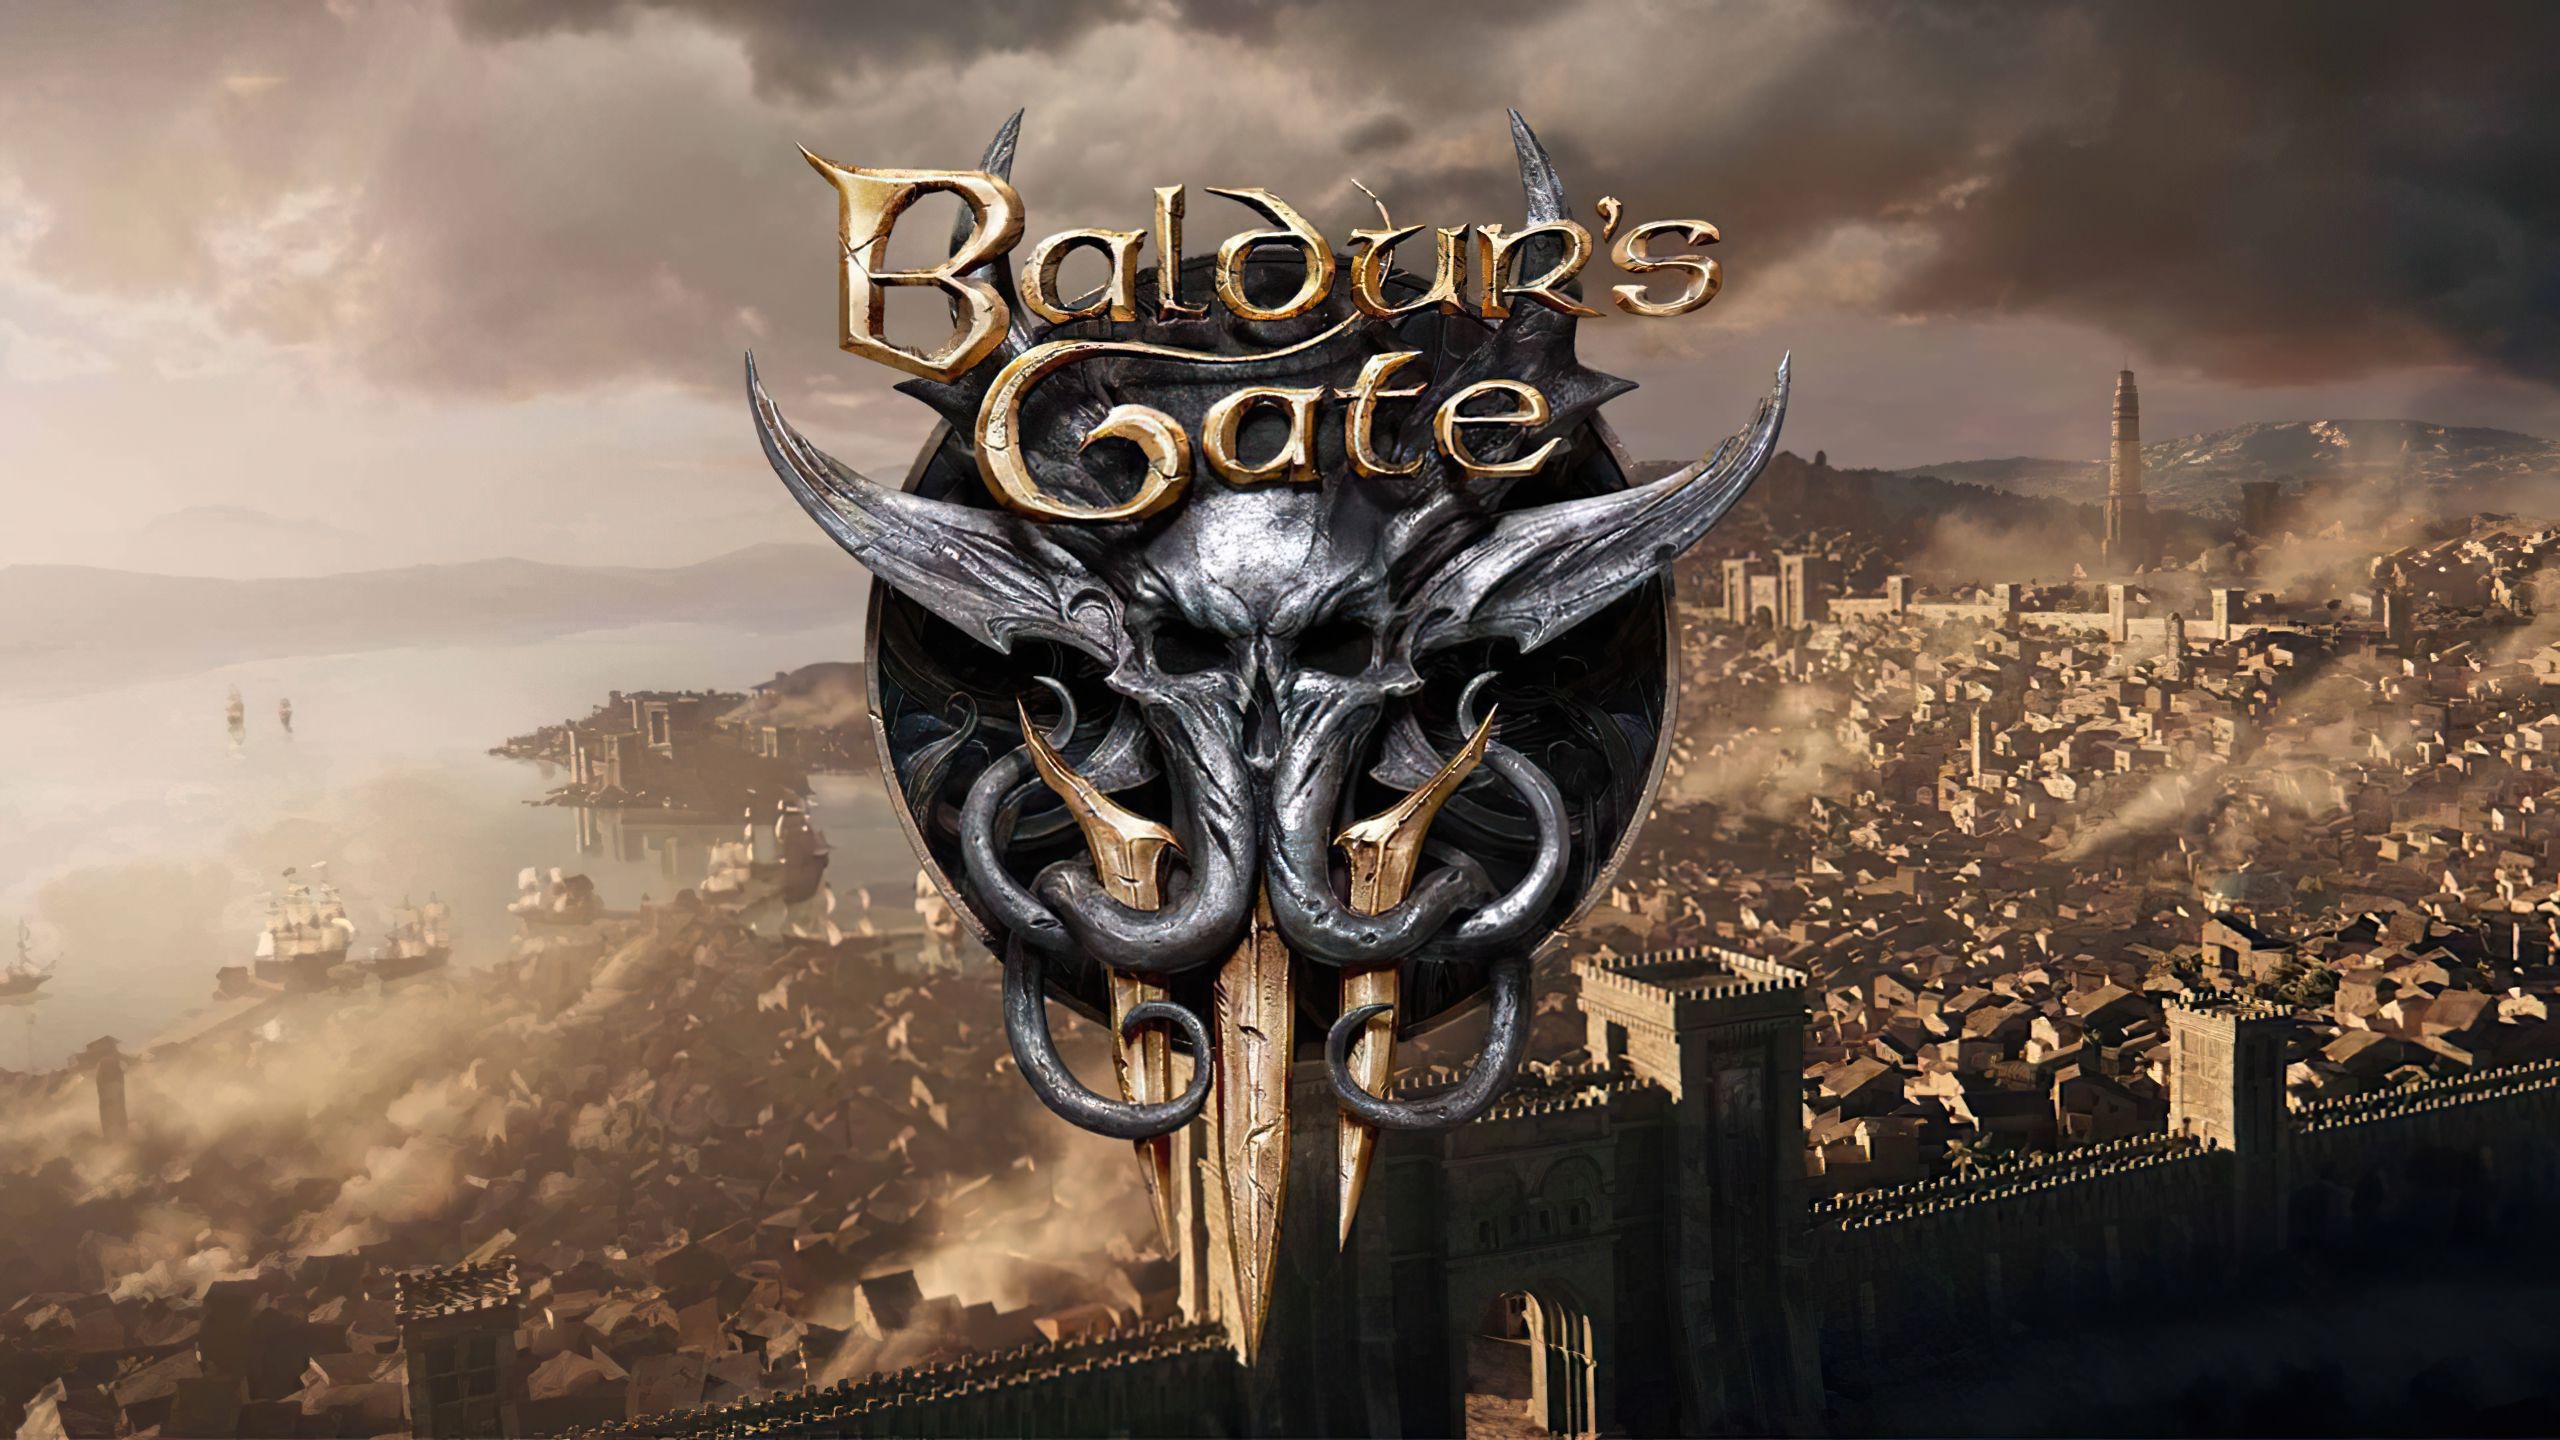 free for ios download Baldur’s Gate III